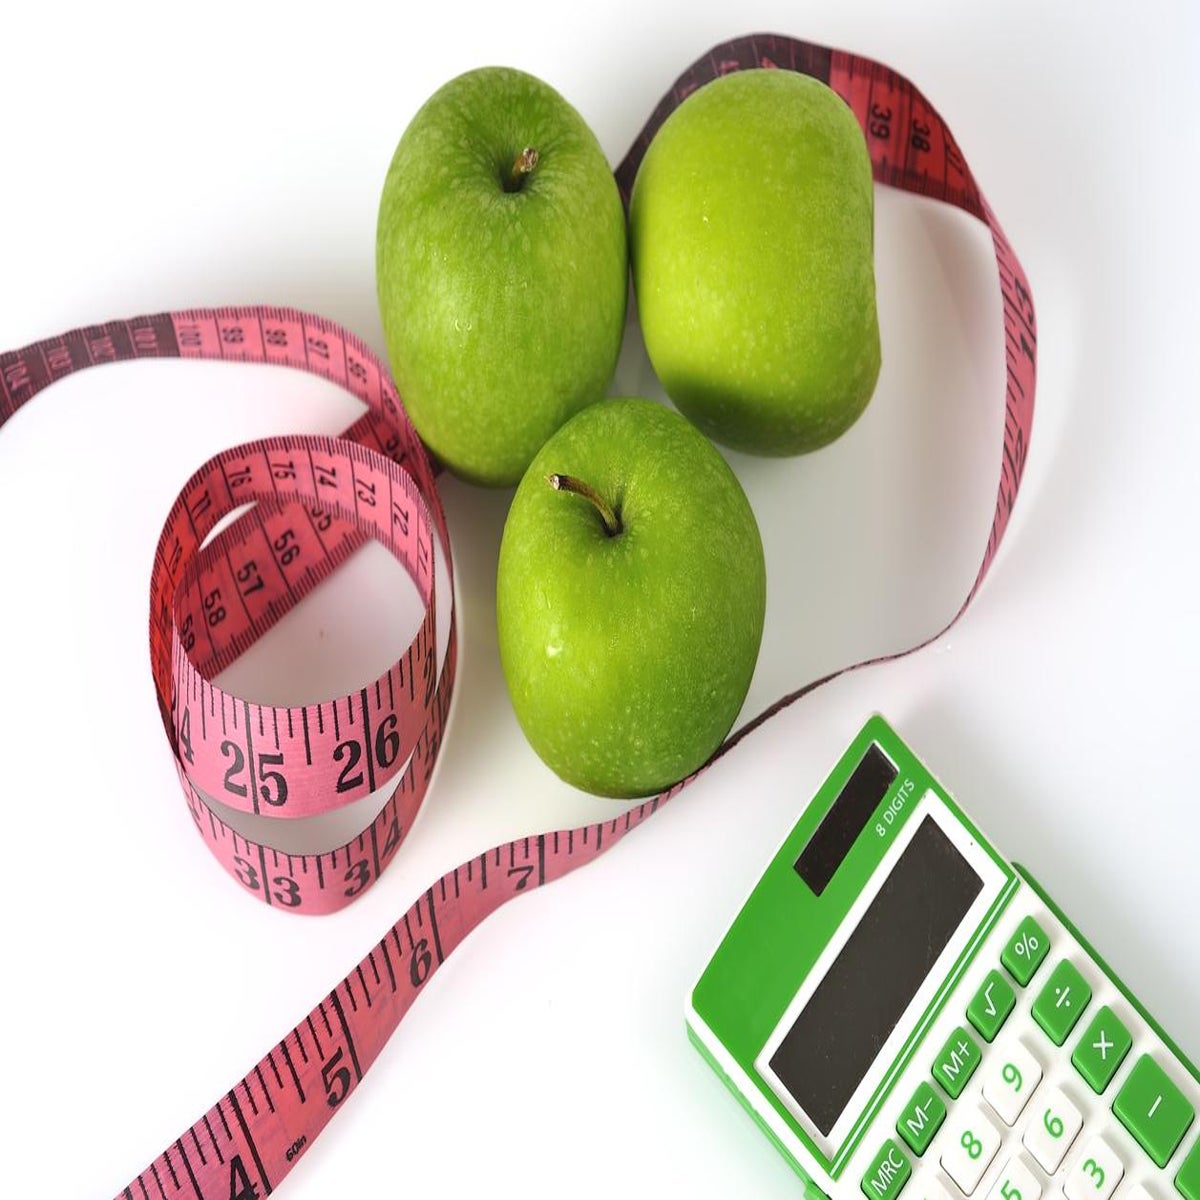 Is your body fat calculator accurate? Are BMI measurements even